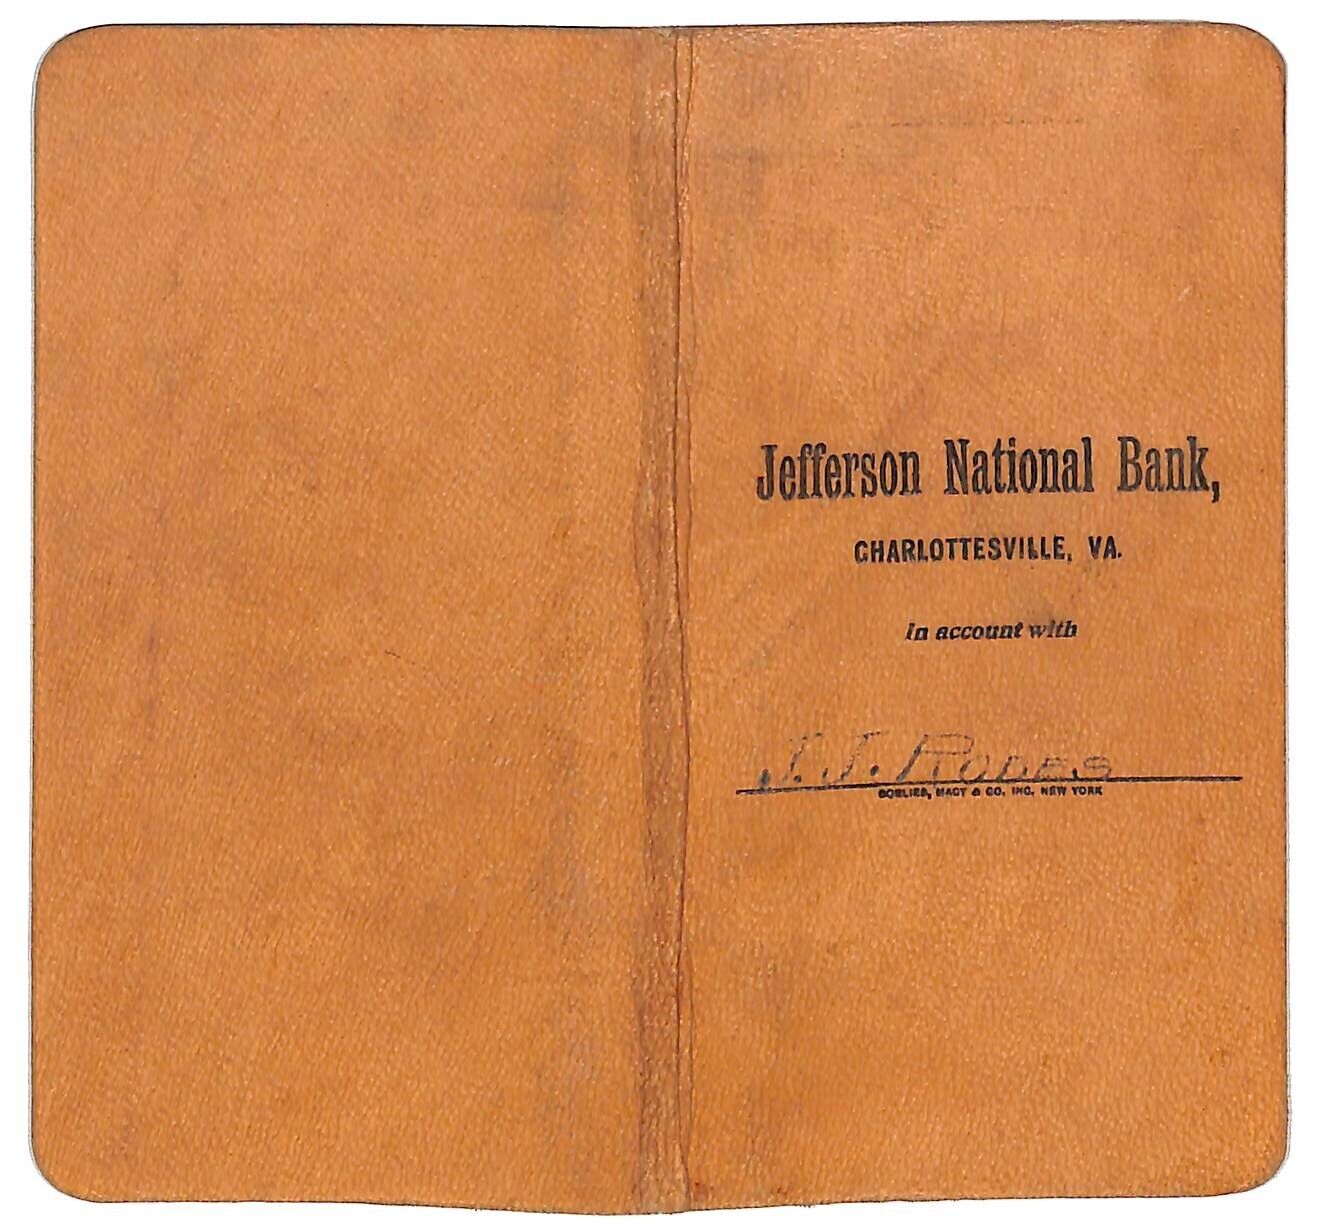 Charlottesville, VA Jefferson National Bank Notebook J.J. Rodes c1910-20